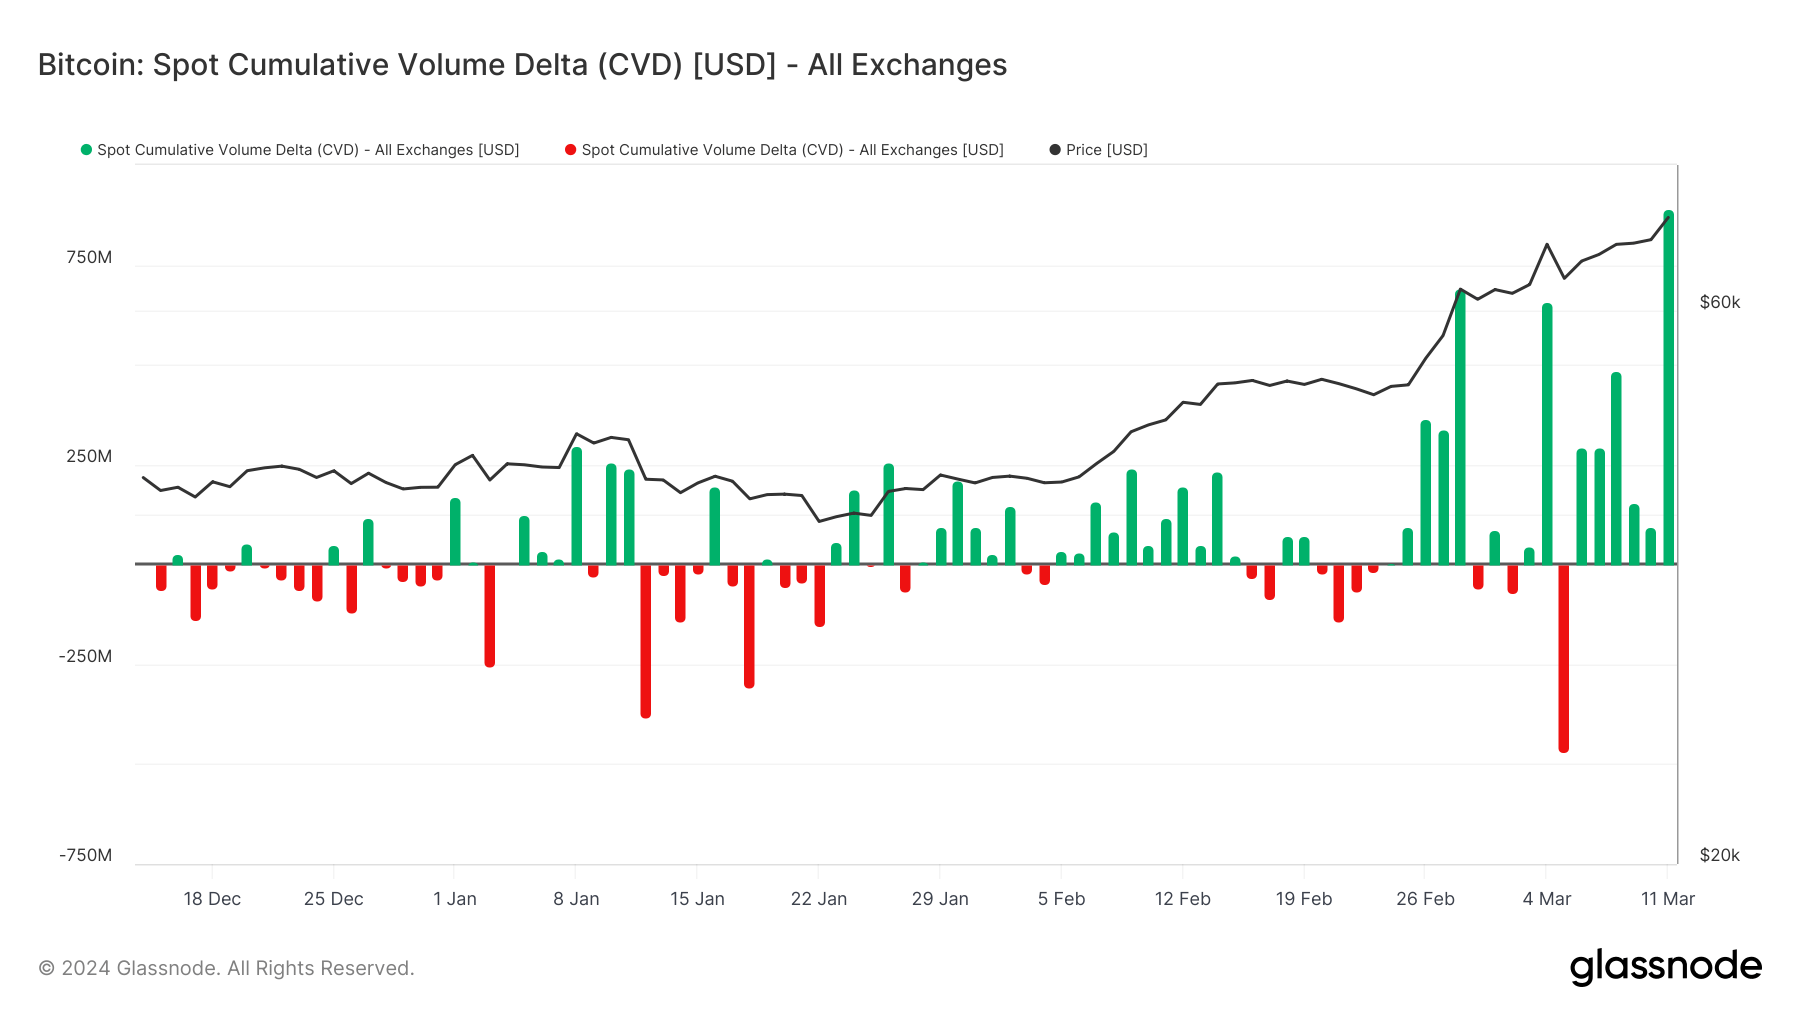 Bitcoin Spot Cumulative Volume Delta (CVD) (Source: Glassnode)